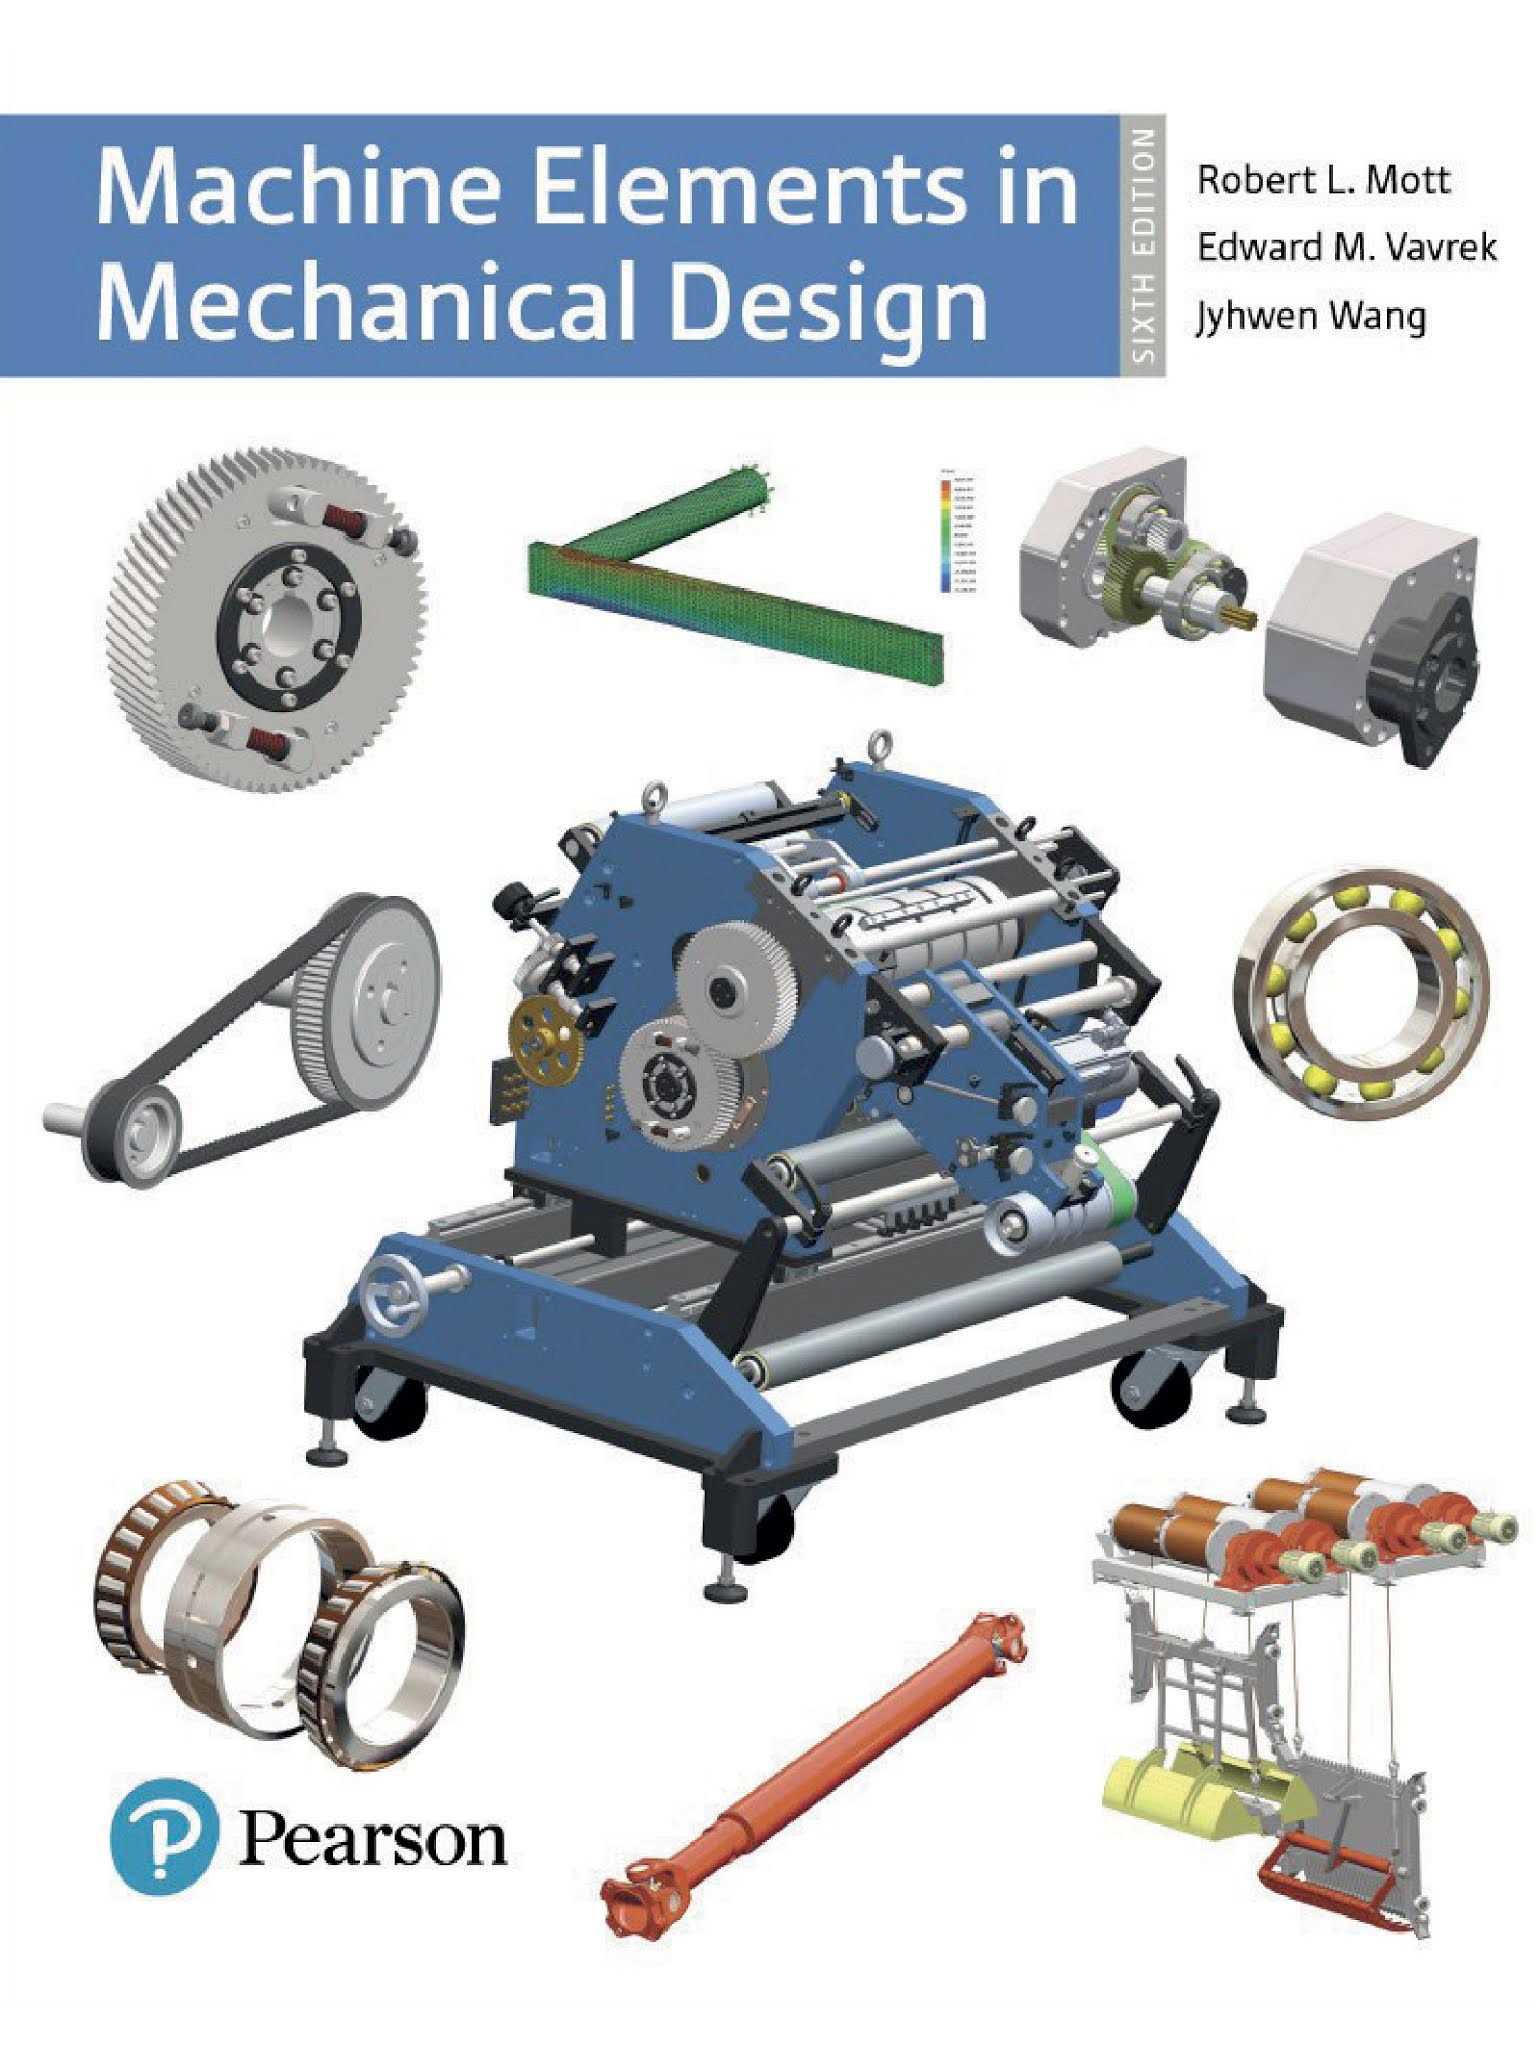 phd in mechanical design